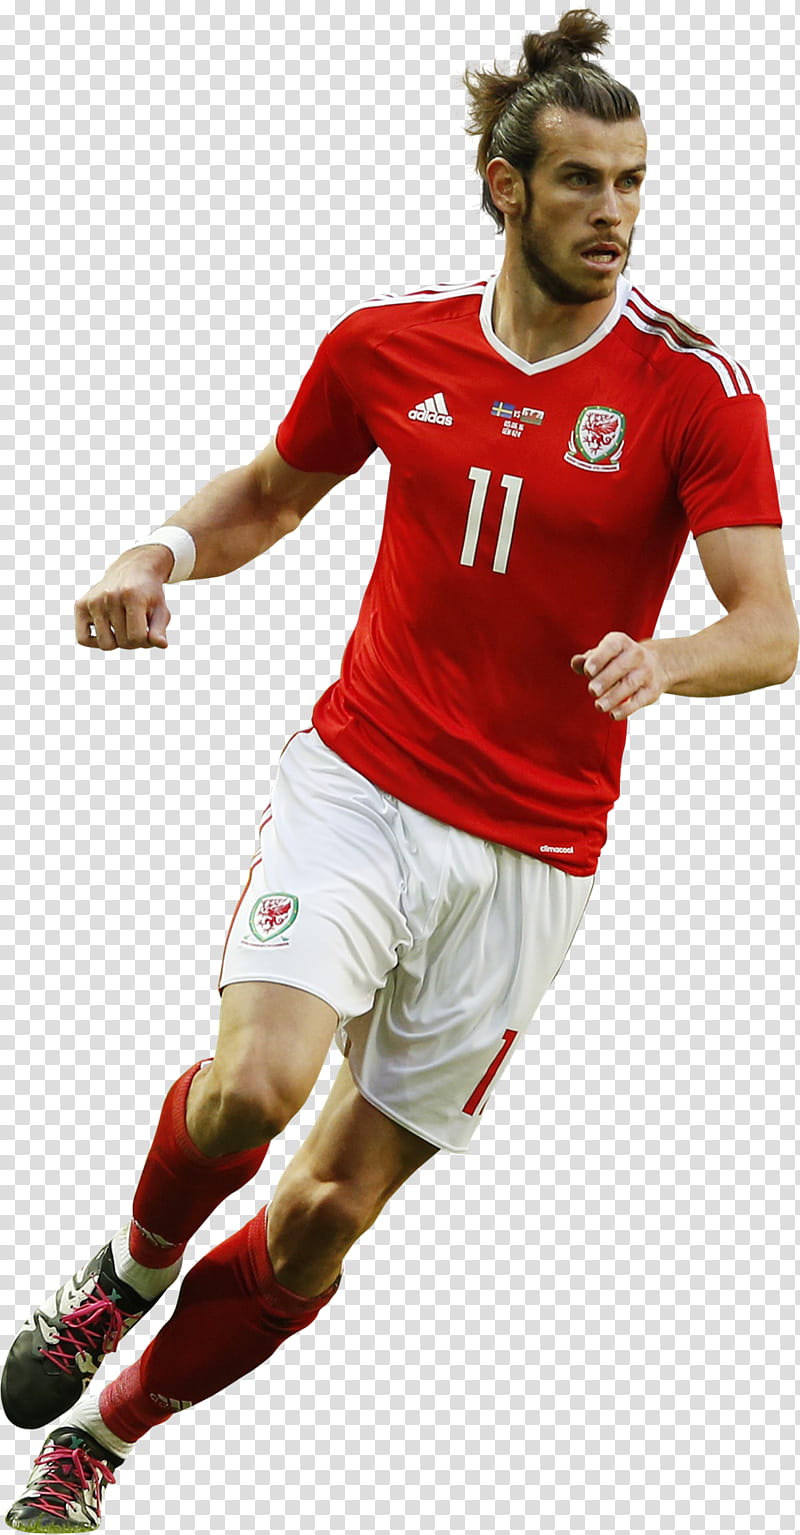 Soccer Ball, Gareth Bale, Soccer Player, UEFA Euro 2016, Wales National Football Team, Premier League, Team Sport, Sports transparent background PNG clipart